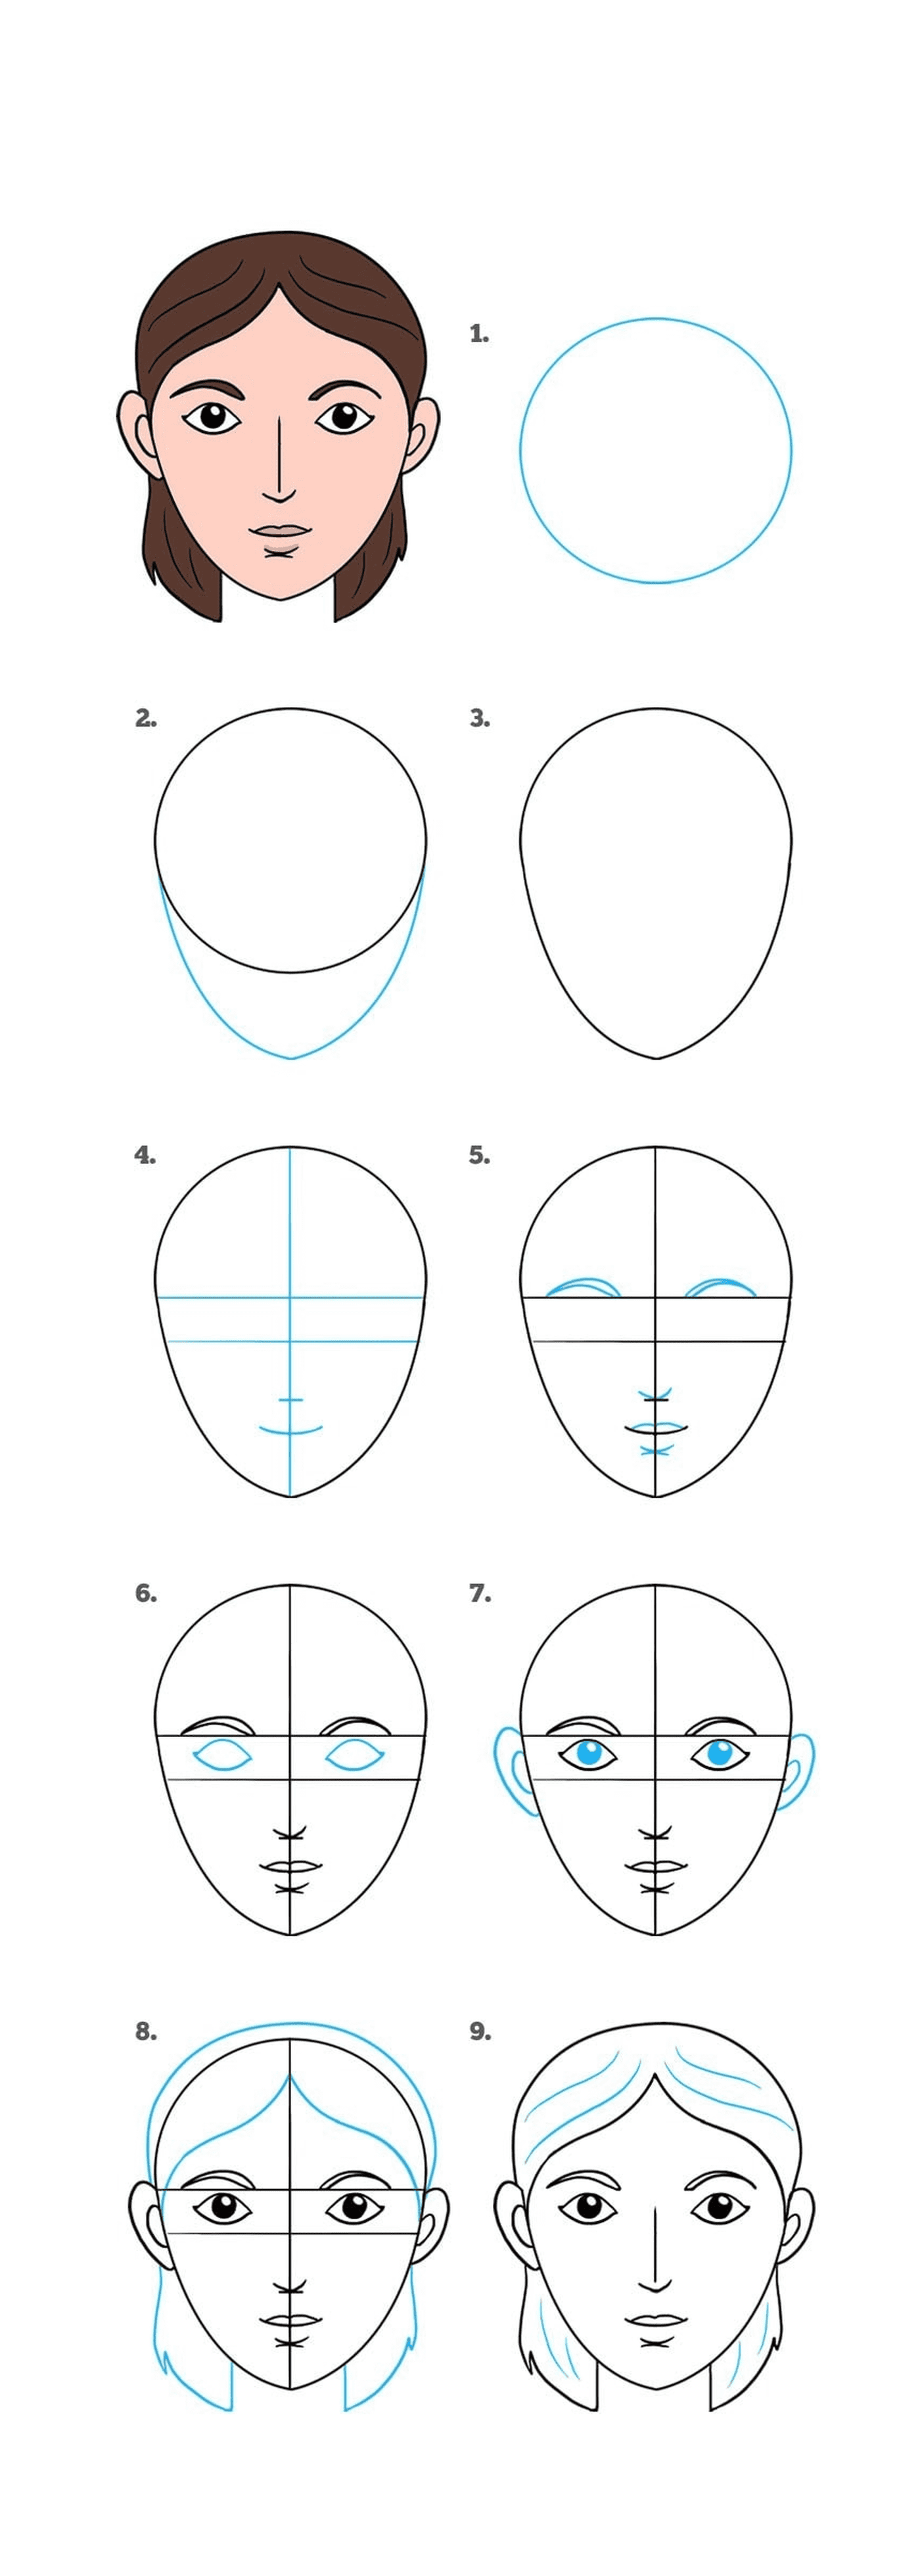 comment dessiner un visage cartoon